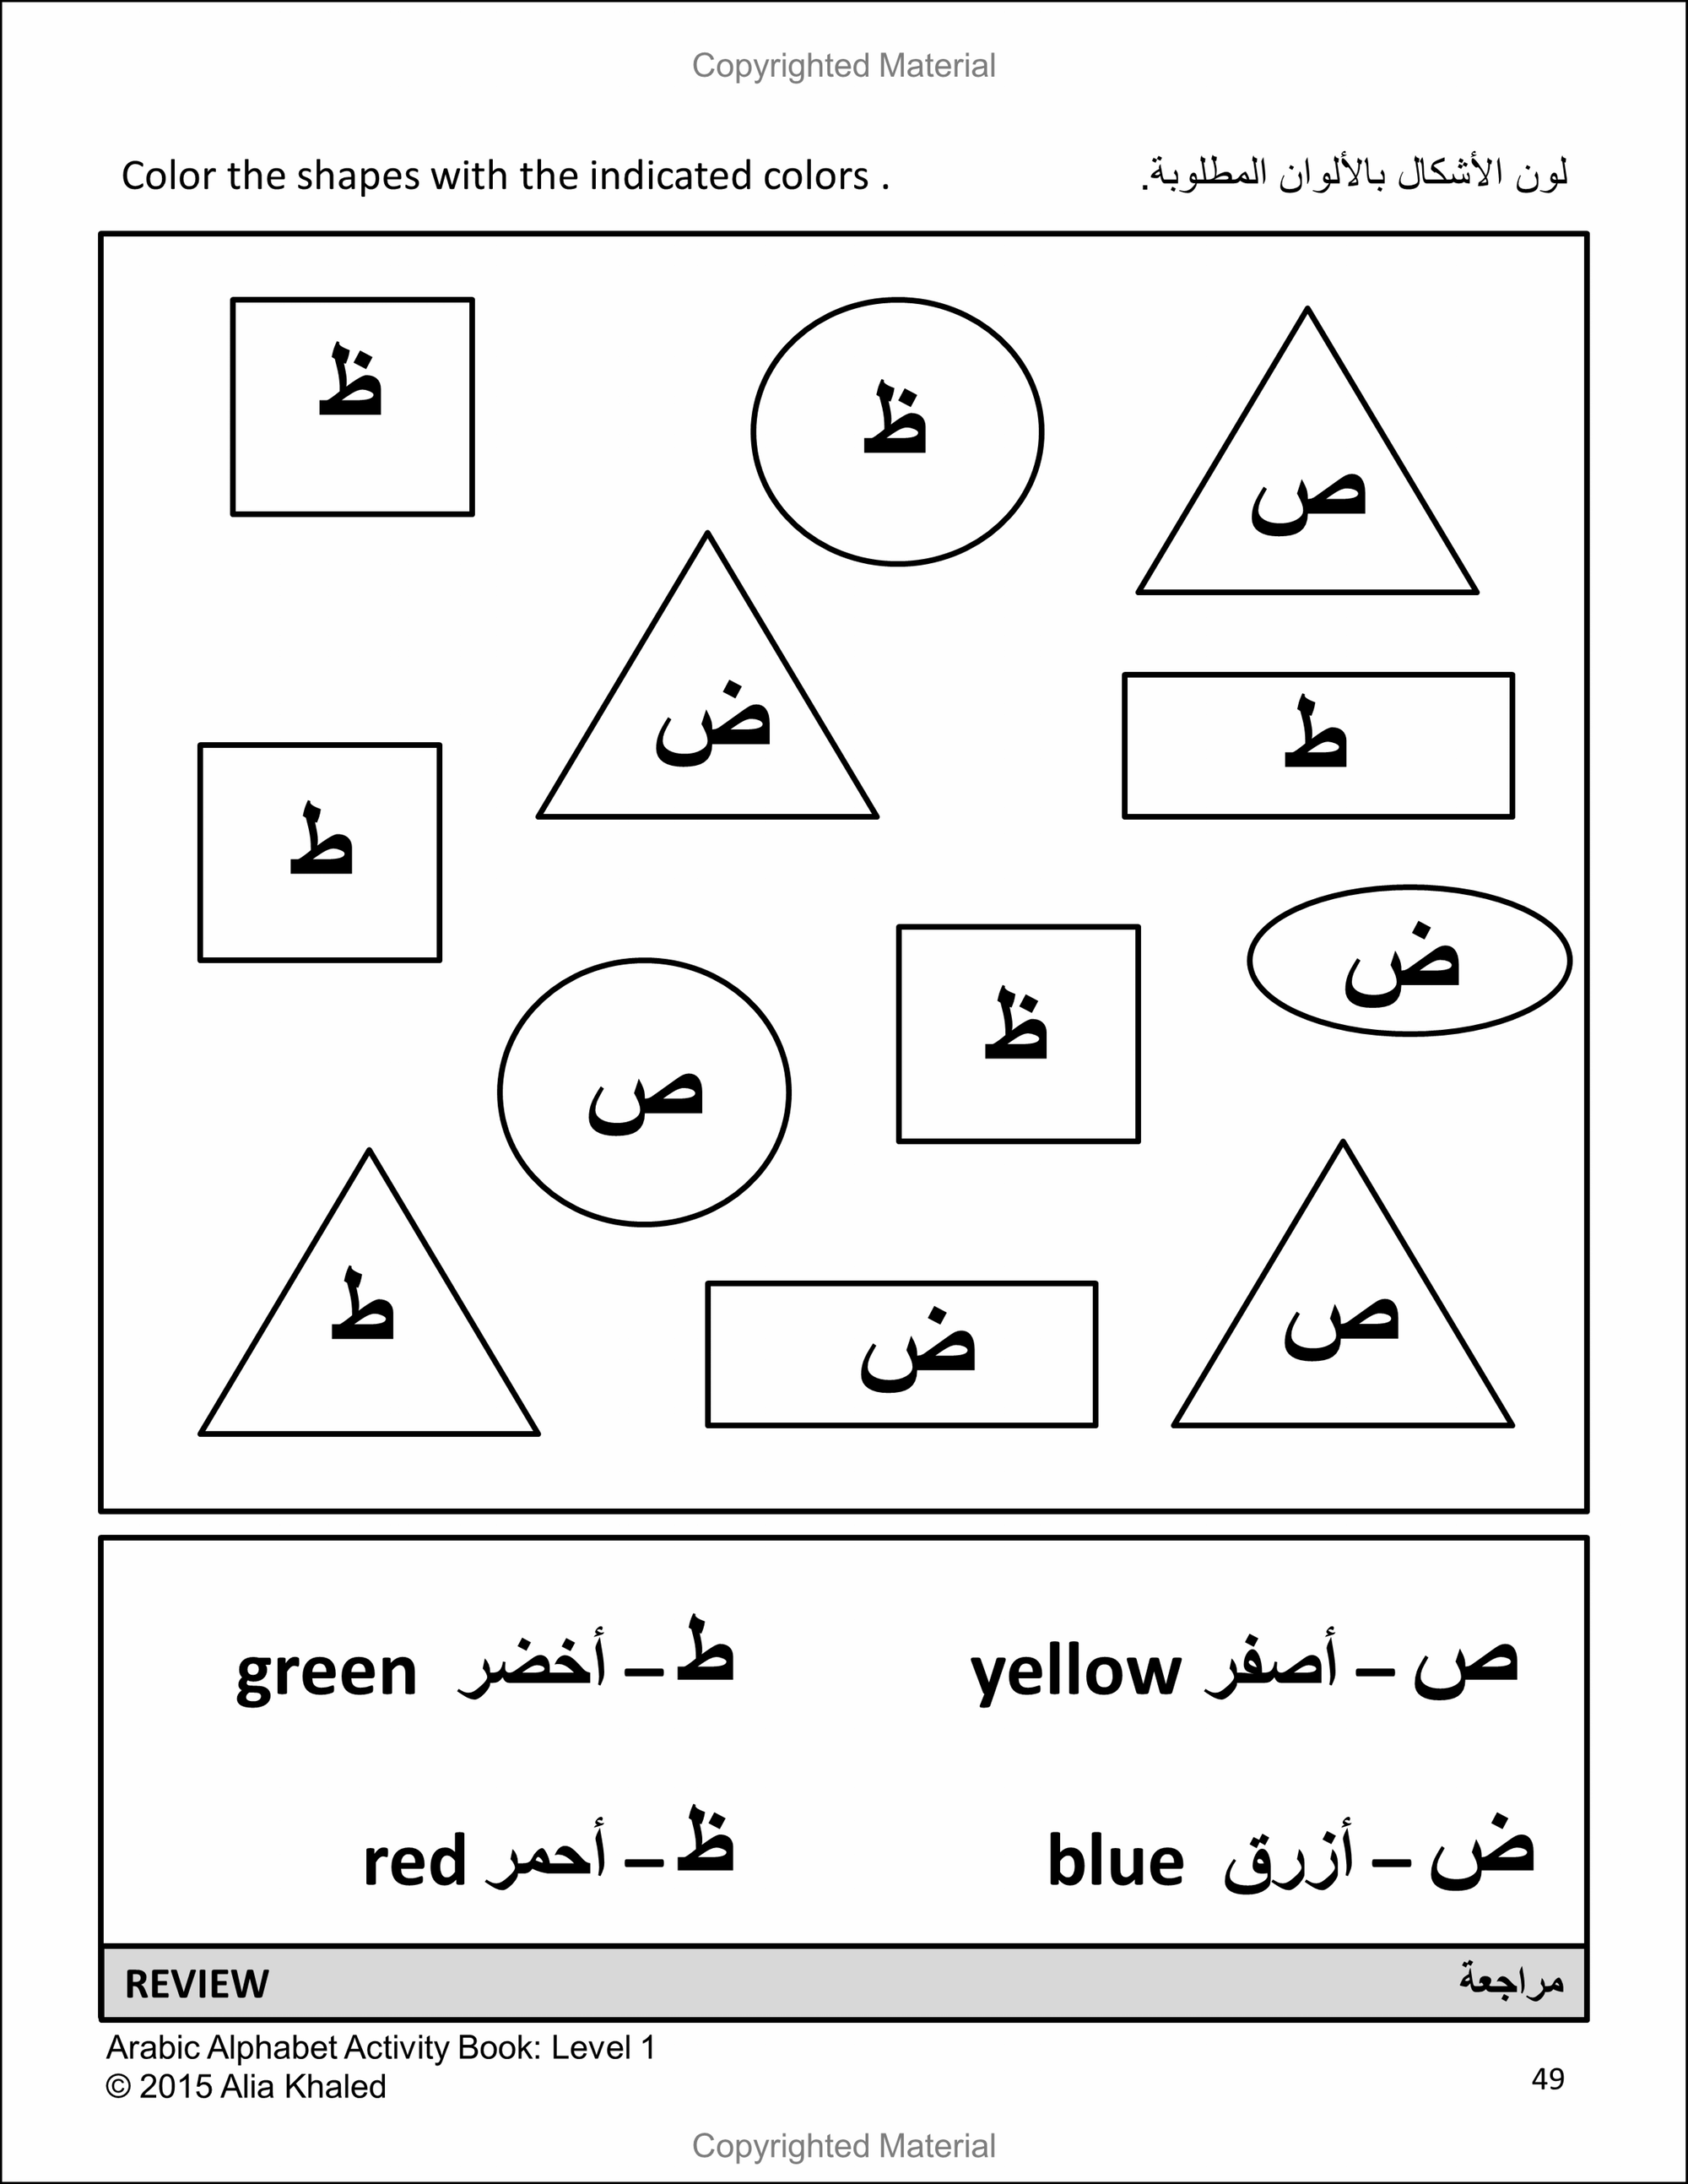 Arabic Alphabet Activity Book: Level 1 (Black/white Edition in Alphabet Tracing Level 1